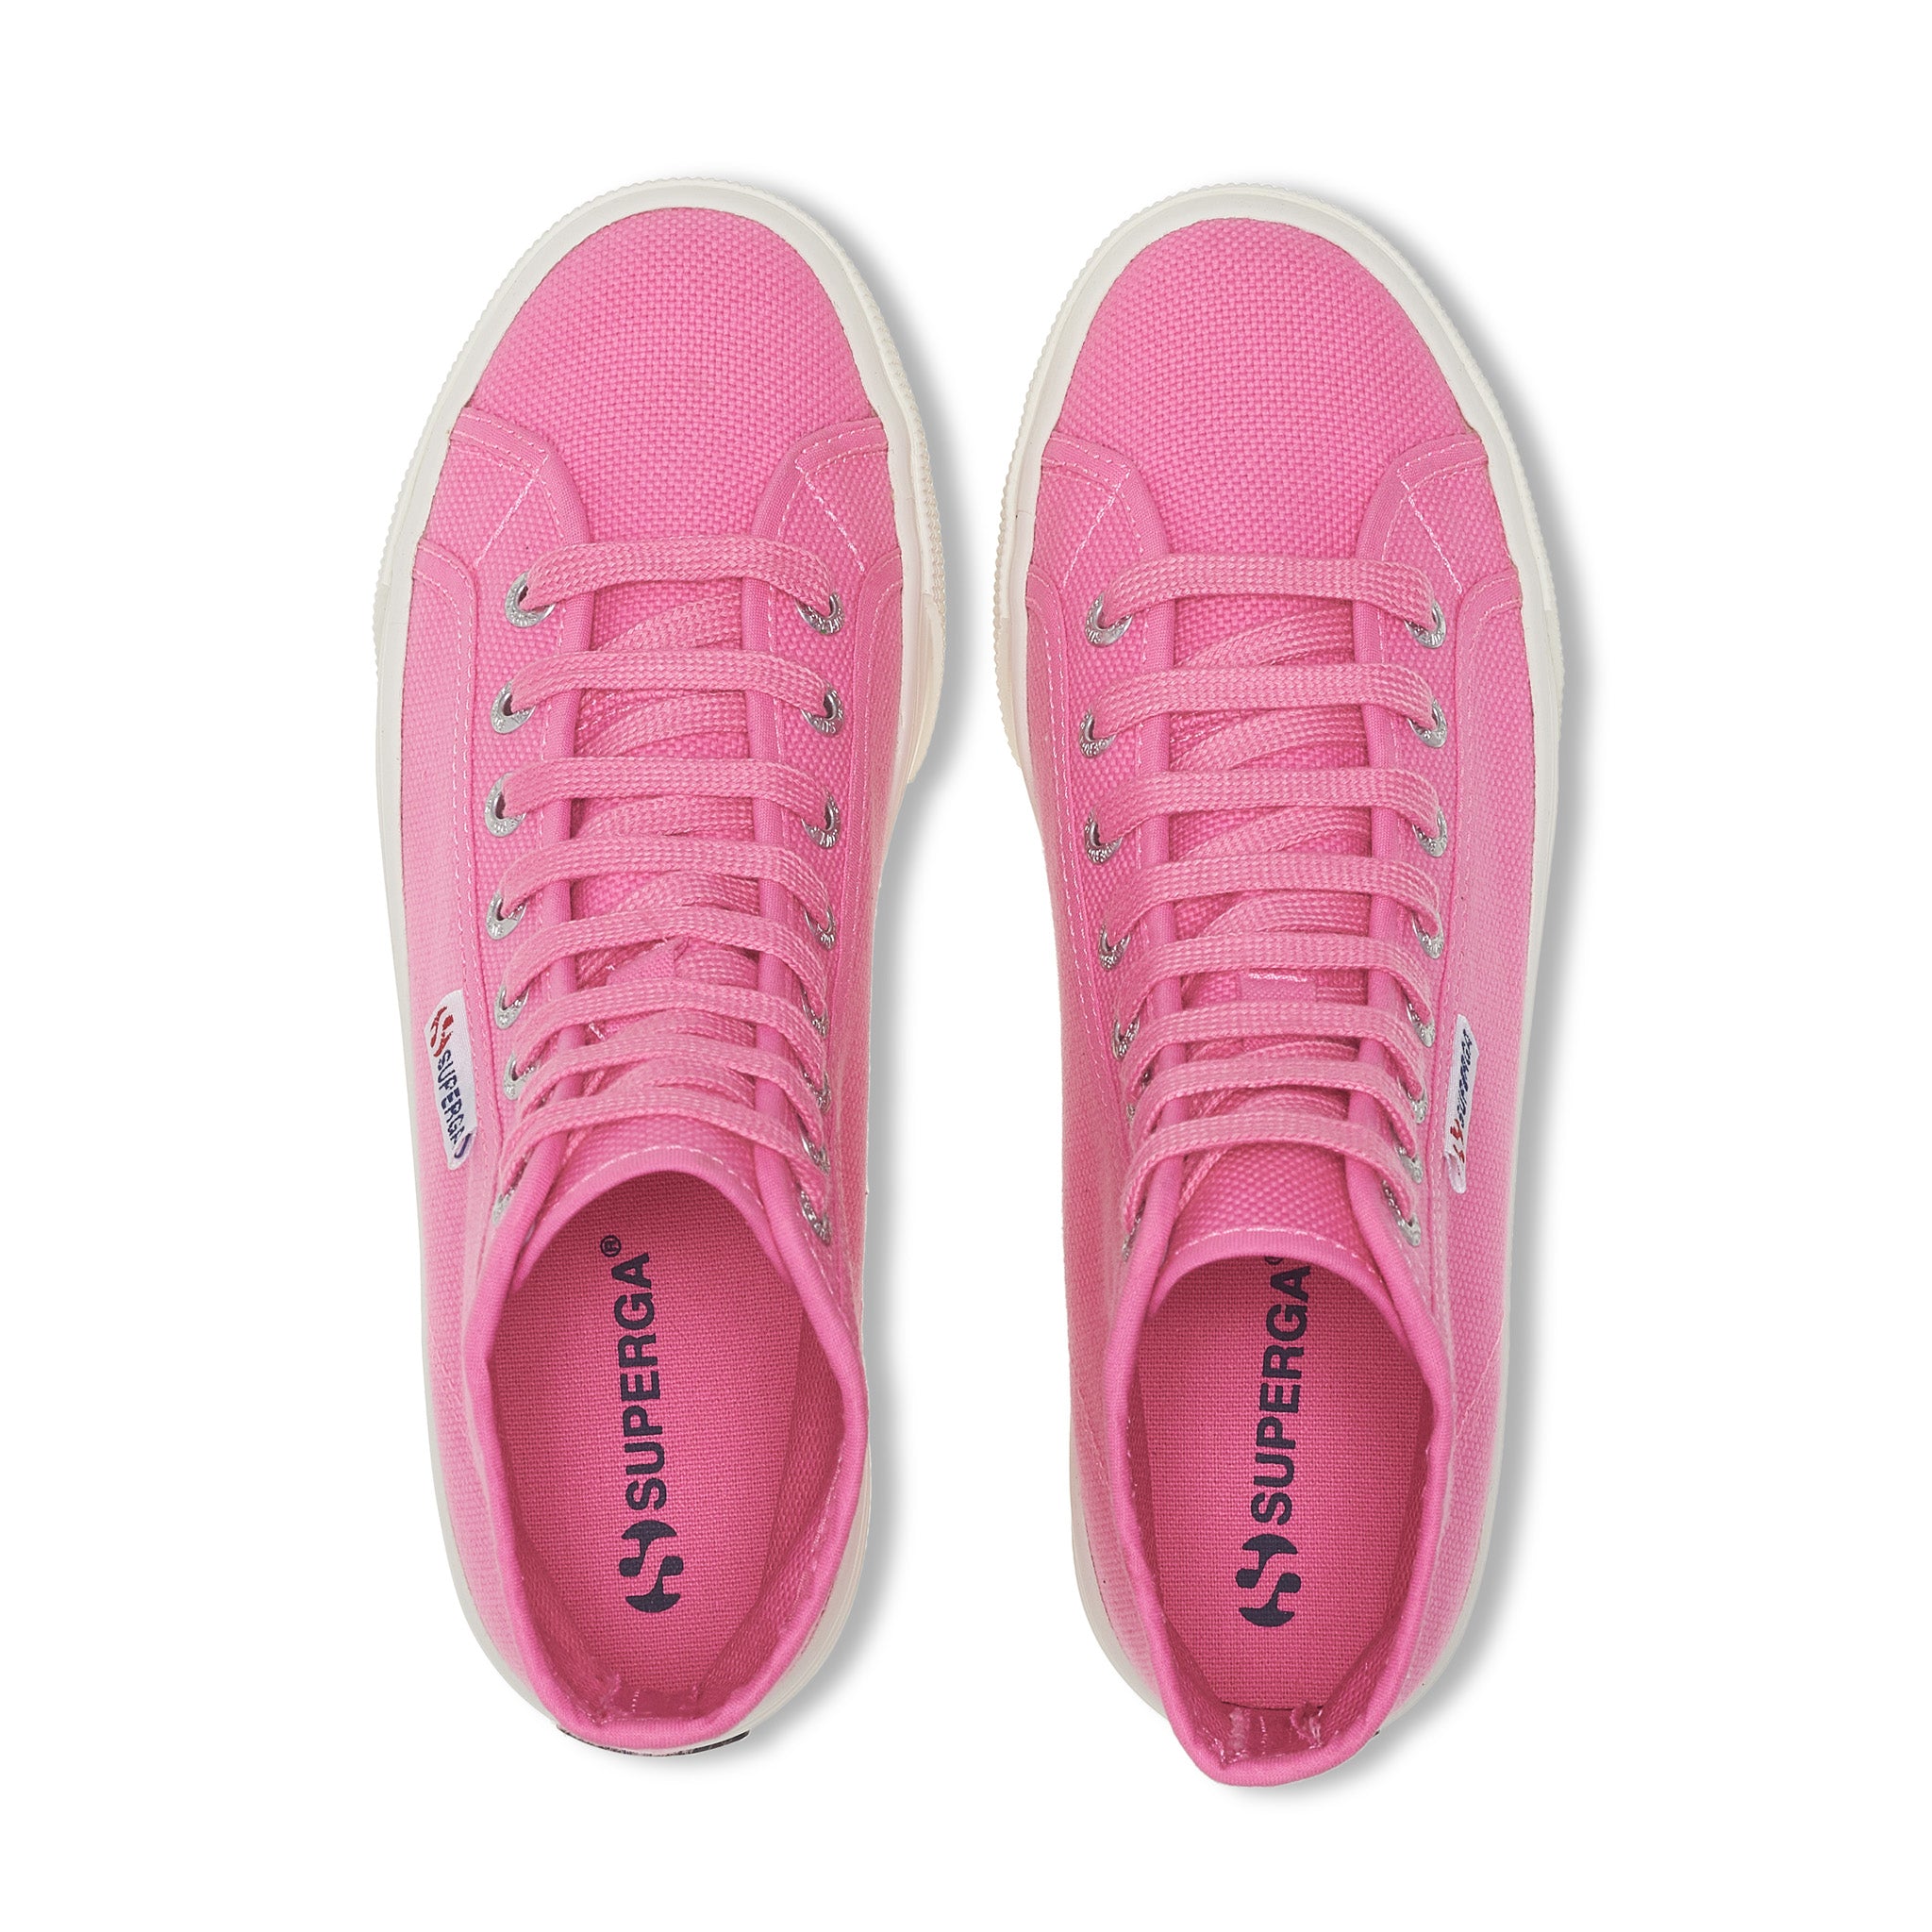 Superga 2708 Hi Top Sneakers - Pink Fuchsia Avorio. Top view.